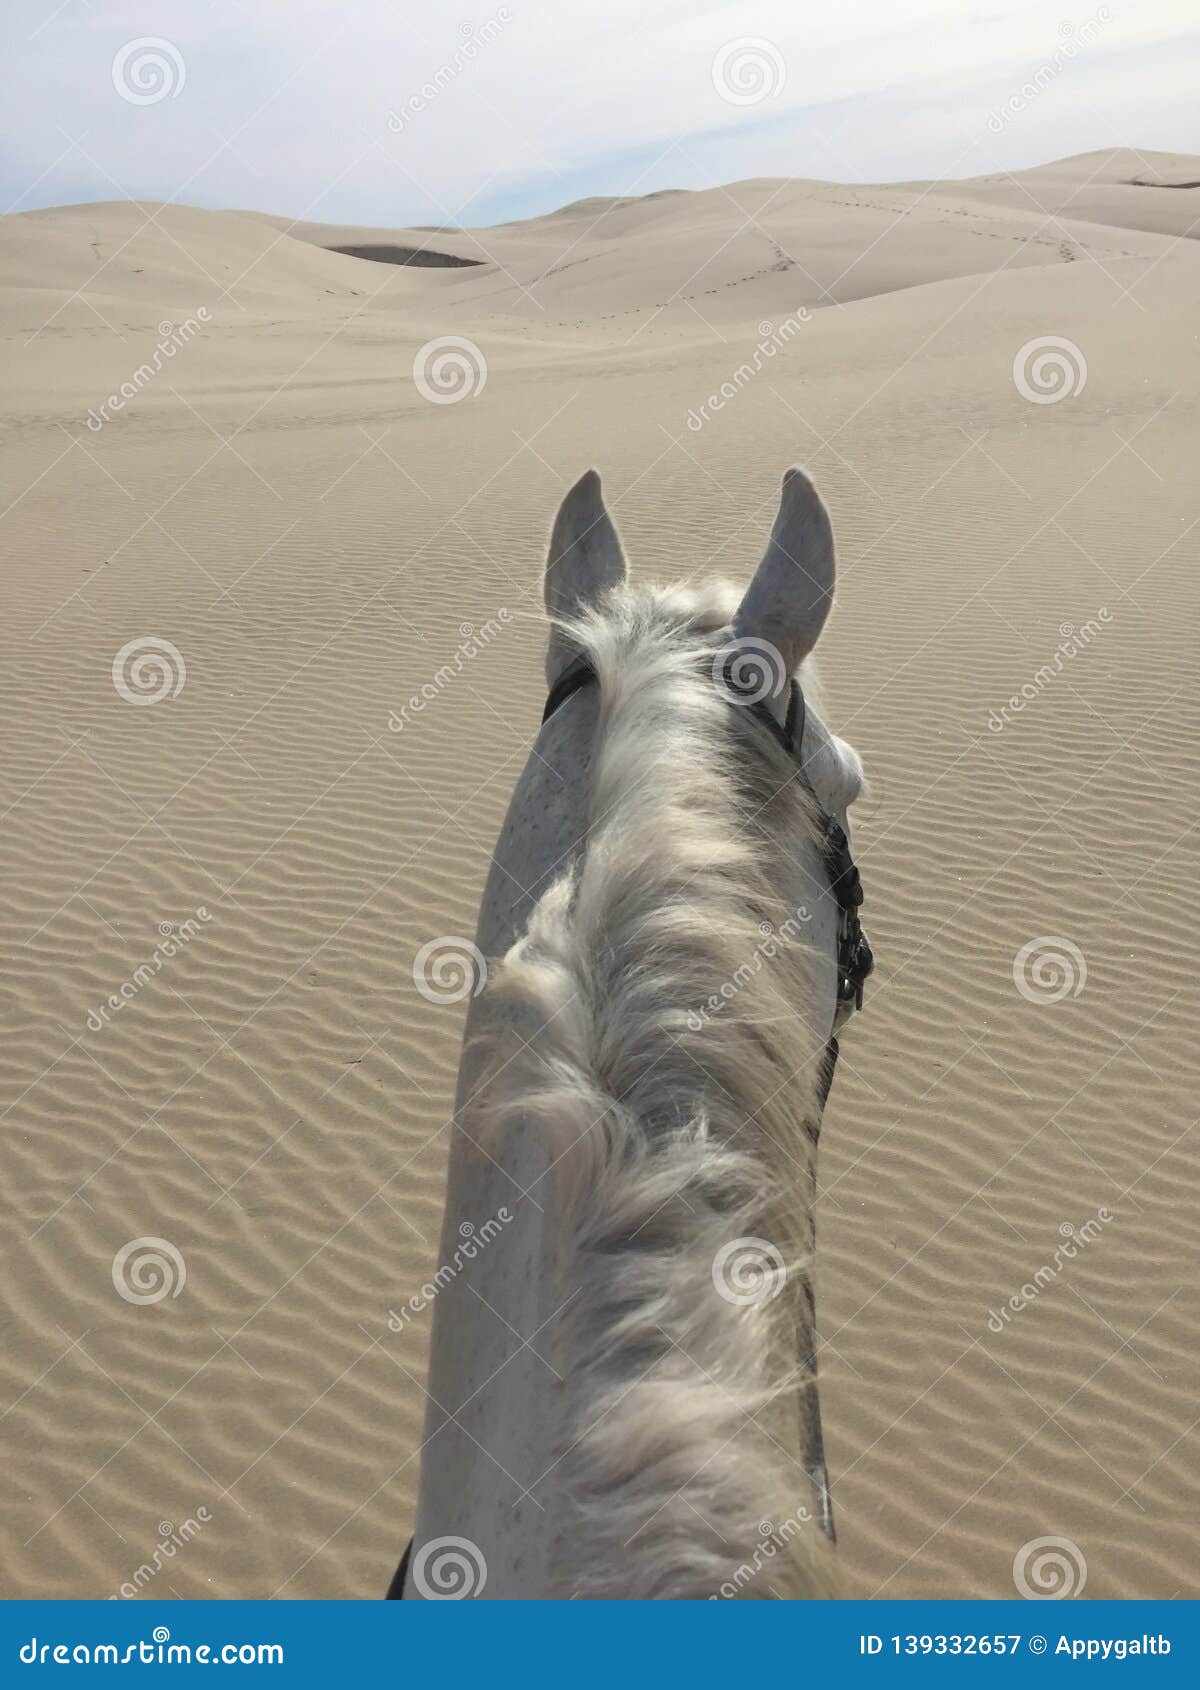 white horse alone in the sand dunes oceano, california